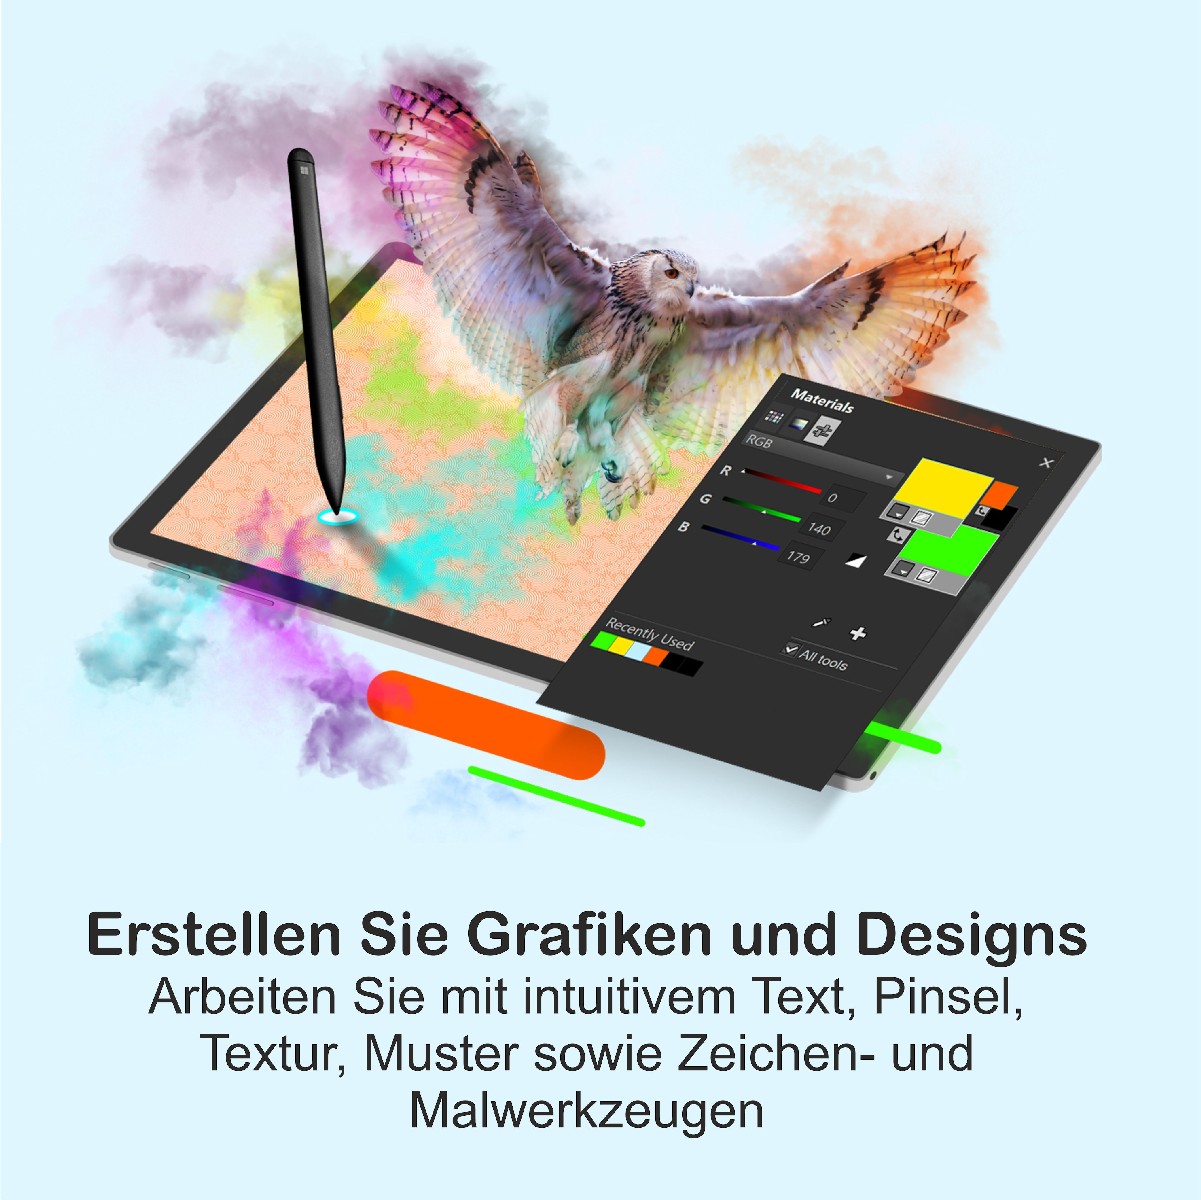 Corel PaintShop Pro 2023, Windows 11/10 64-Bit, Deutsch, Download